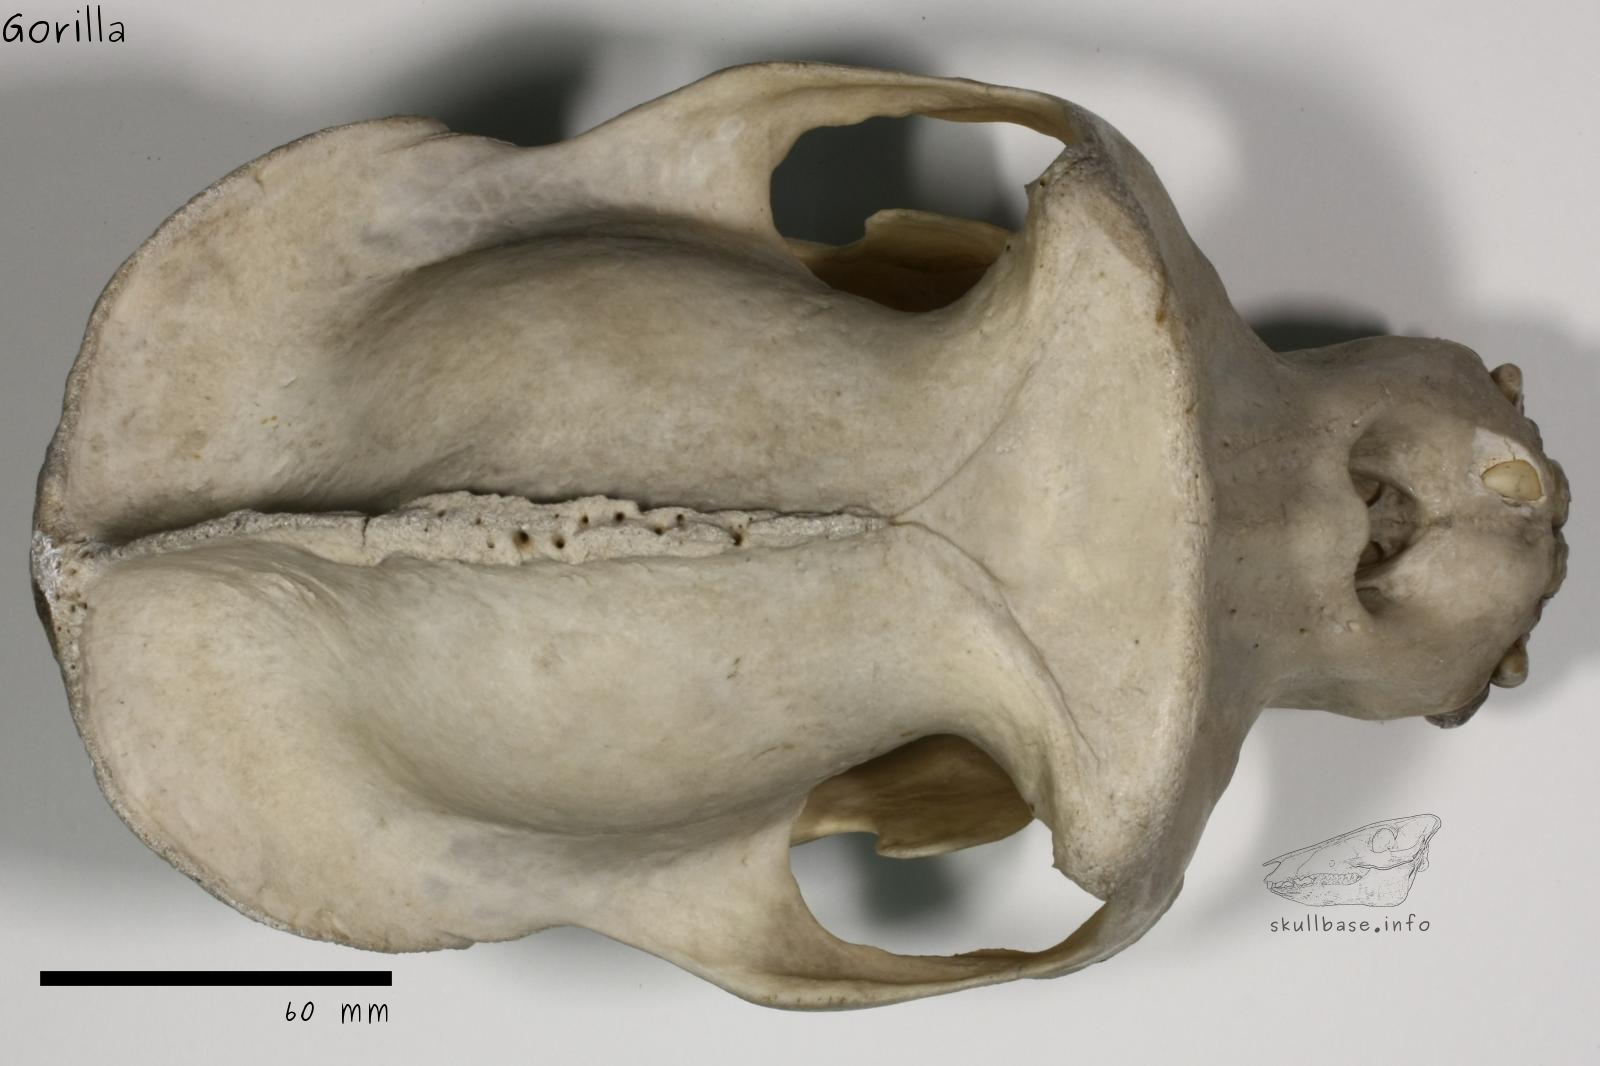 Gorilla (Gorilla gorilla) skull dorsal view